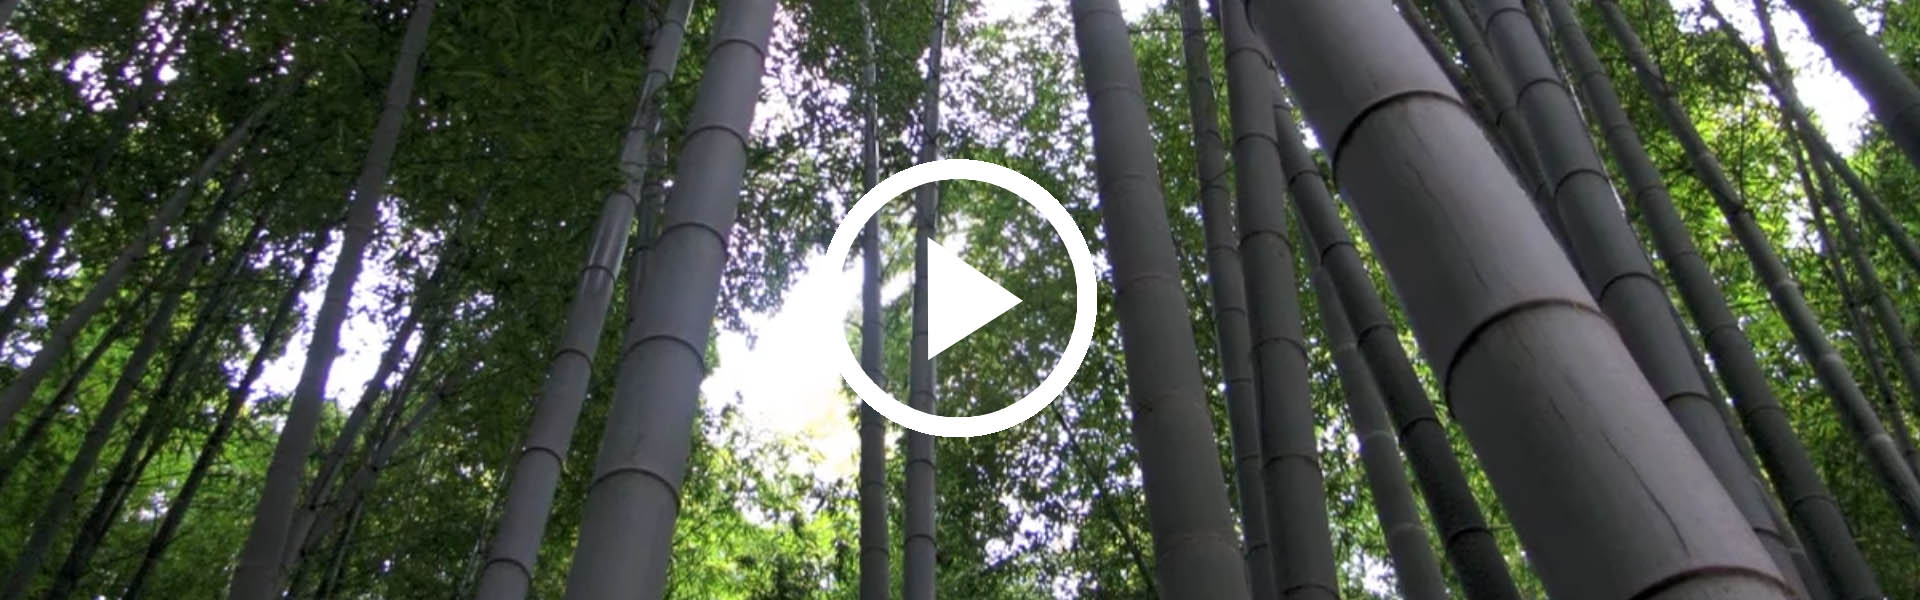 Bambus - 20 zaujmavch faktov